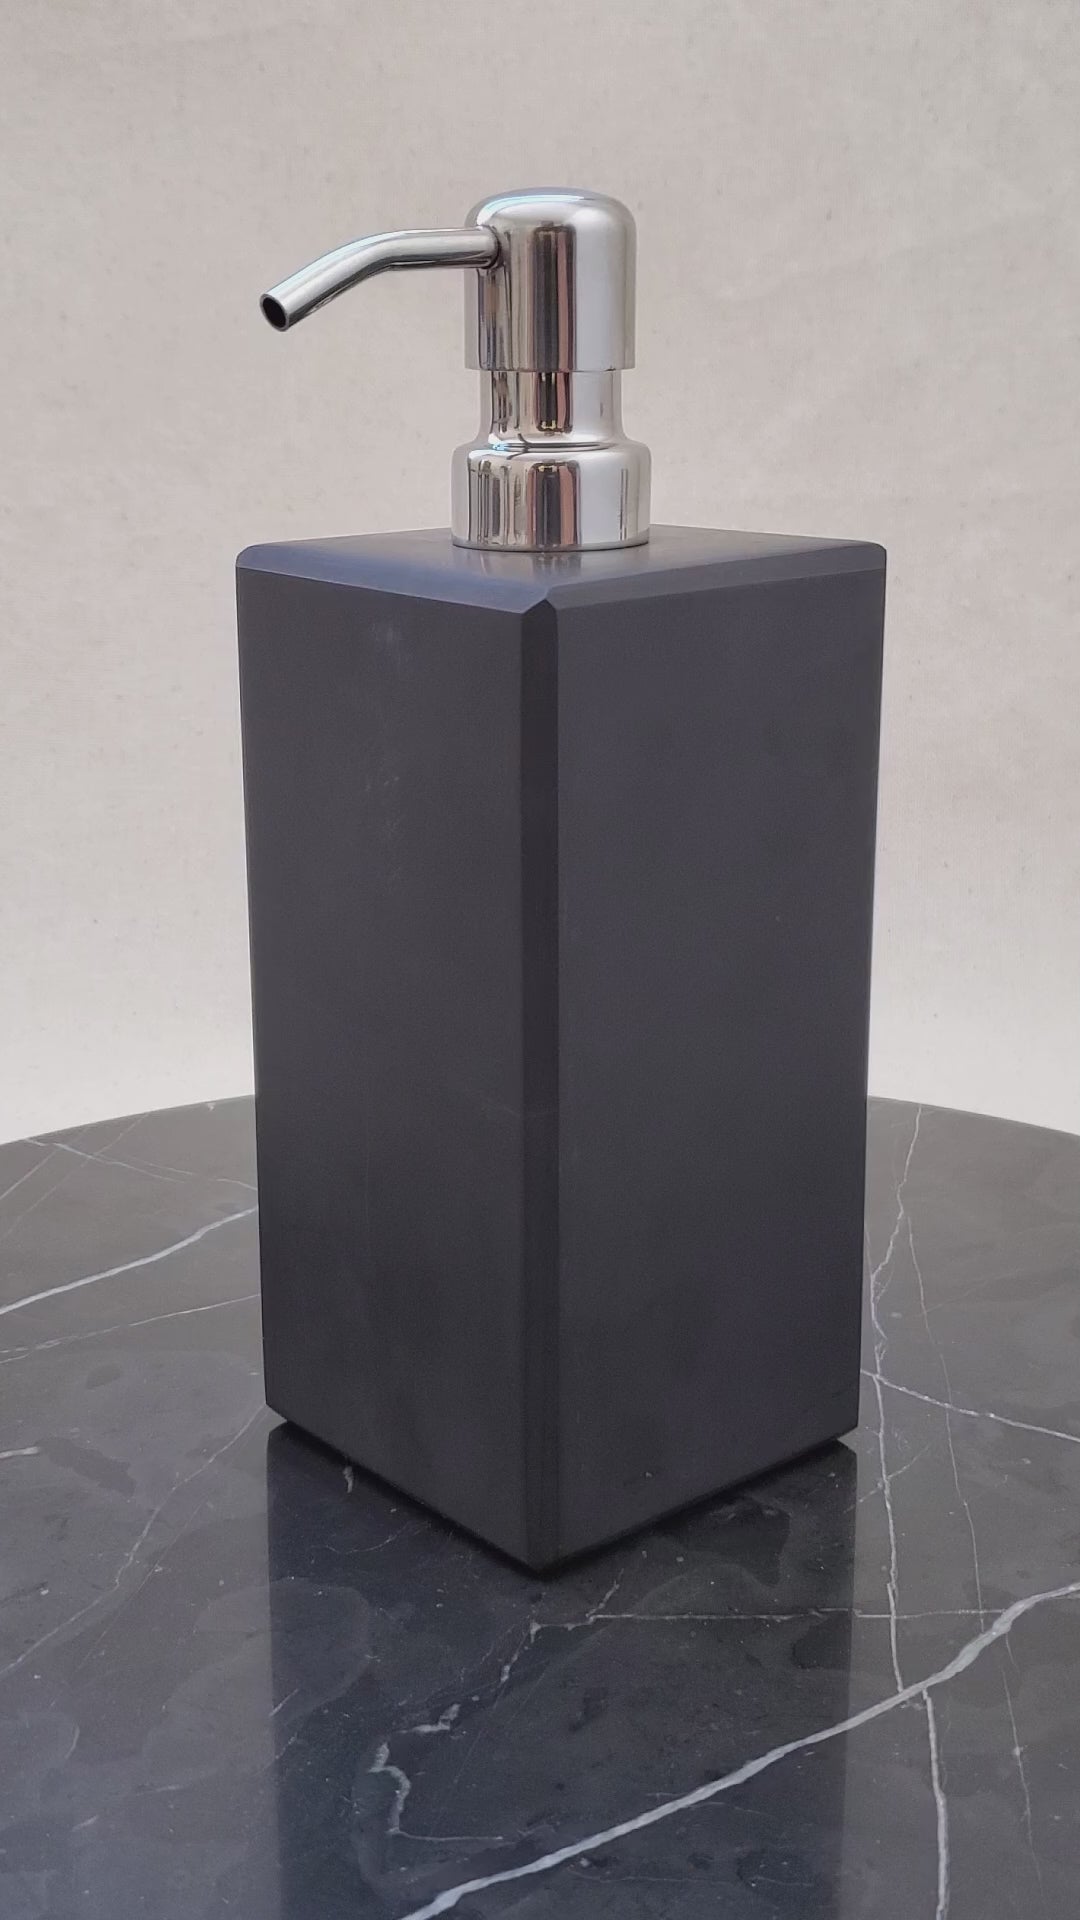 Onyx Stone Liquid Soap or Lotion Dispenser.Handmade. Fast Shipping. Buy Now at www.felipeandgrace.com.